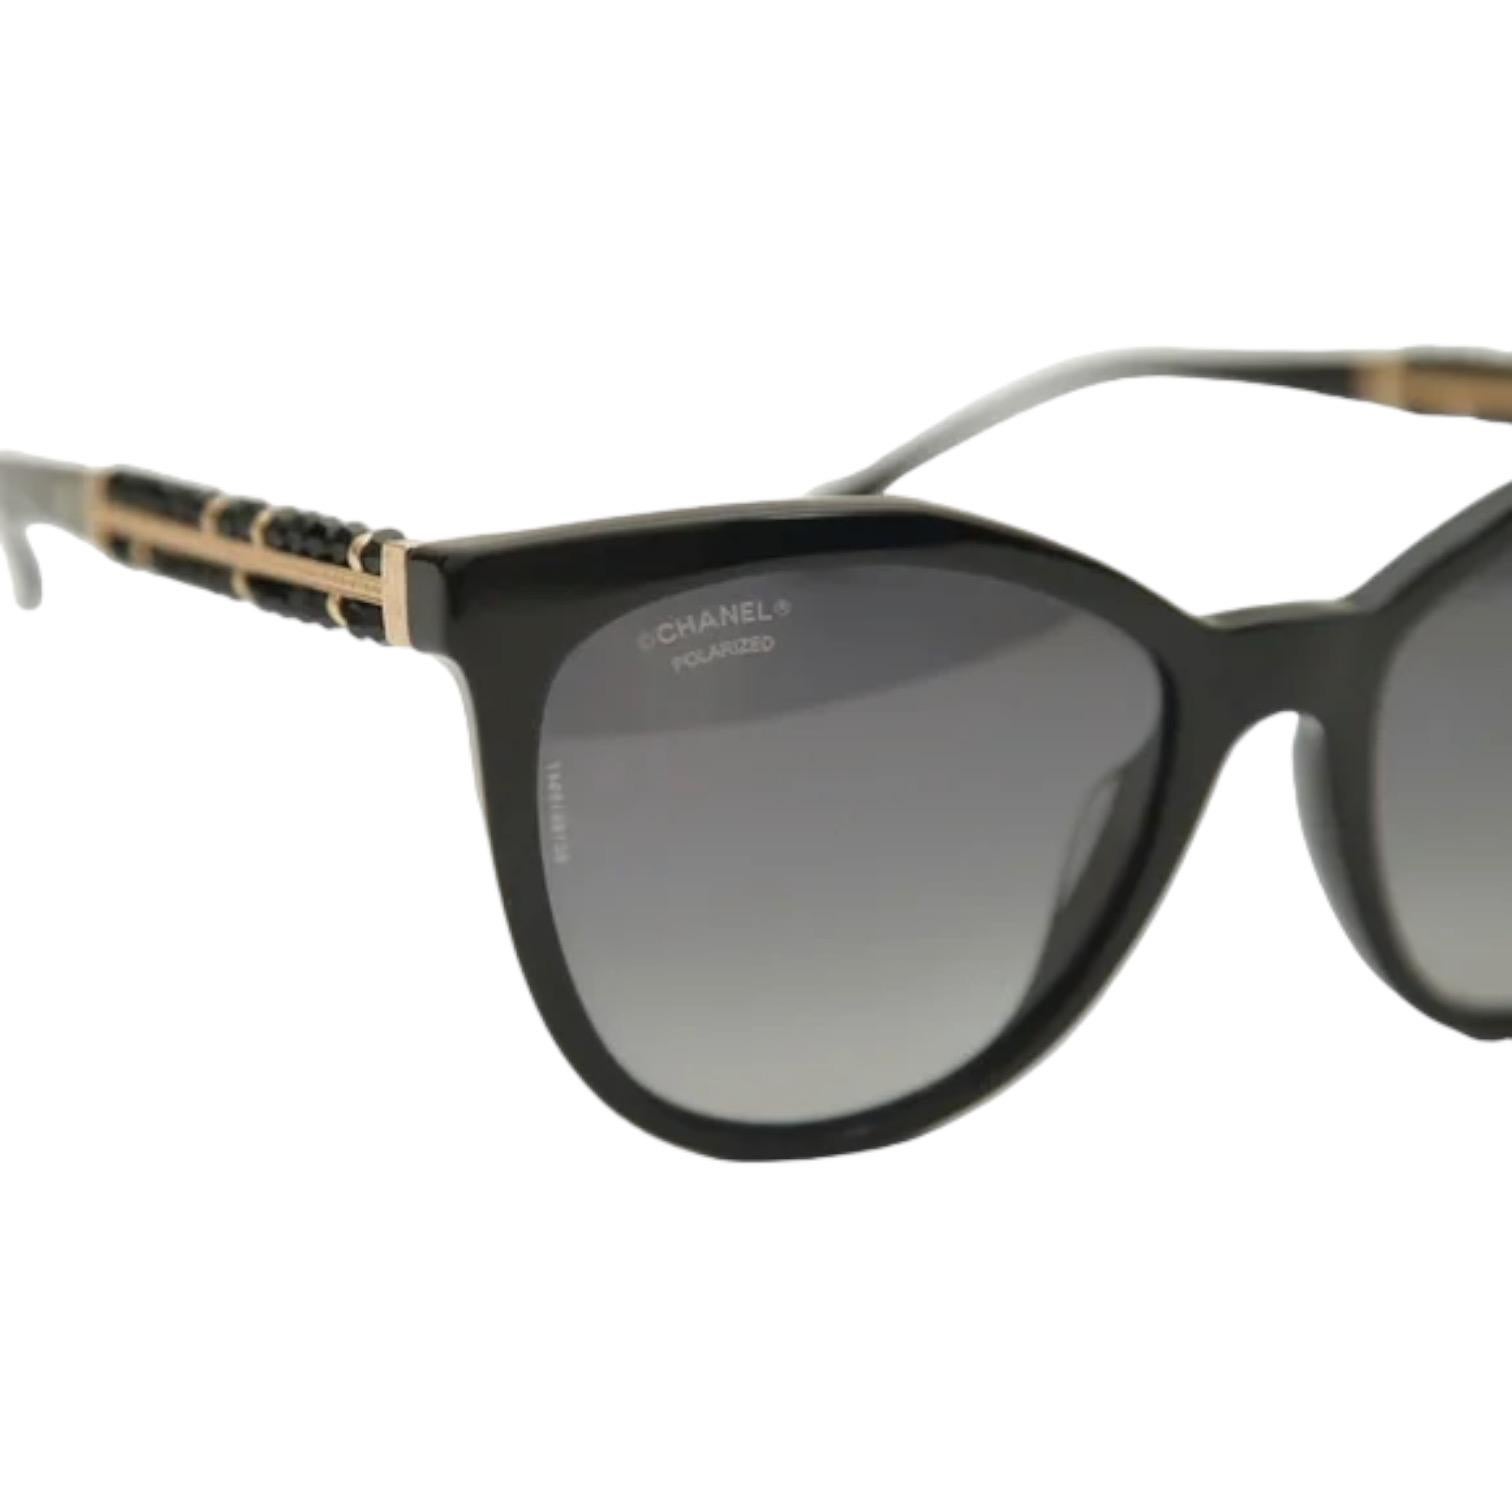 Gray Chanel Black Sunglasses Polarized Grey Lens Beads Gold HW 5376B-A c501-S8